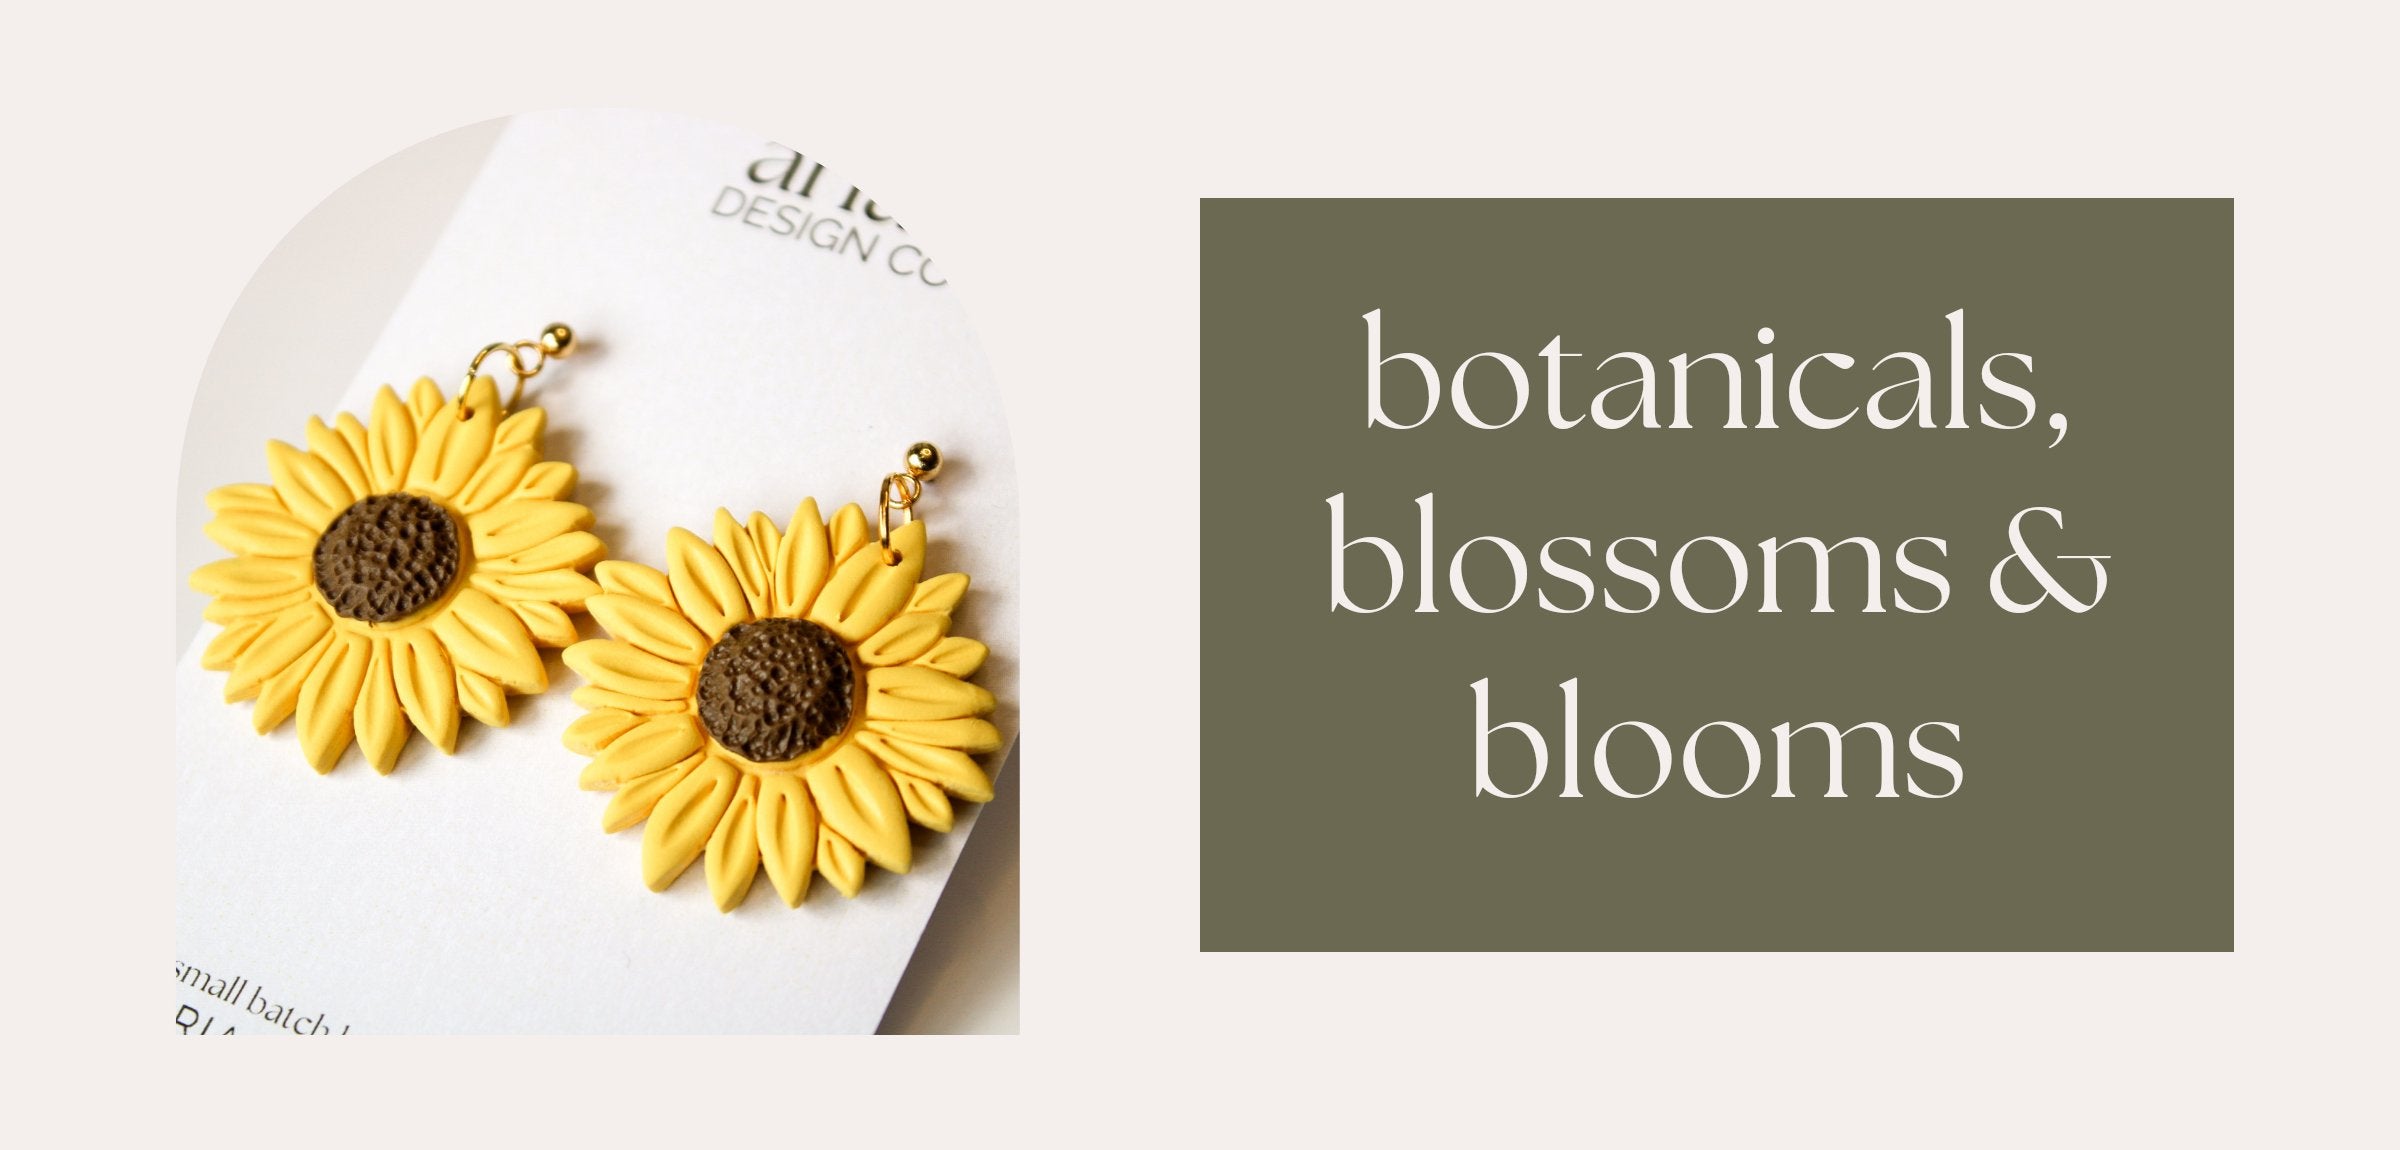 Botanicals, Blossoms & Blooms